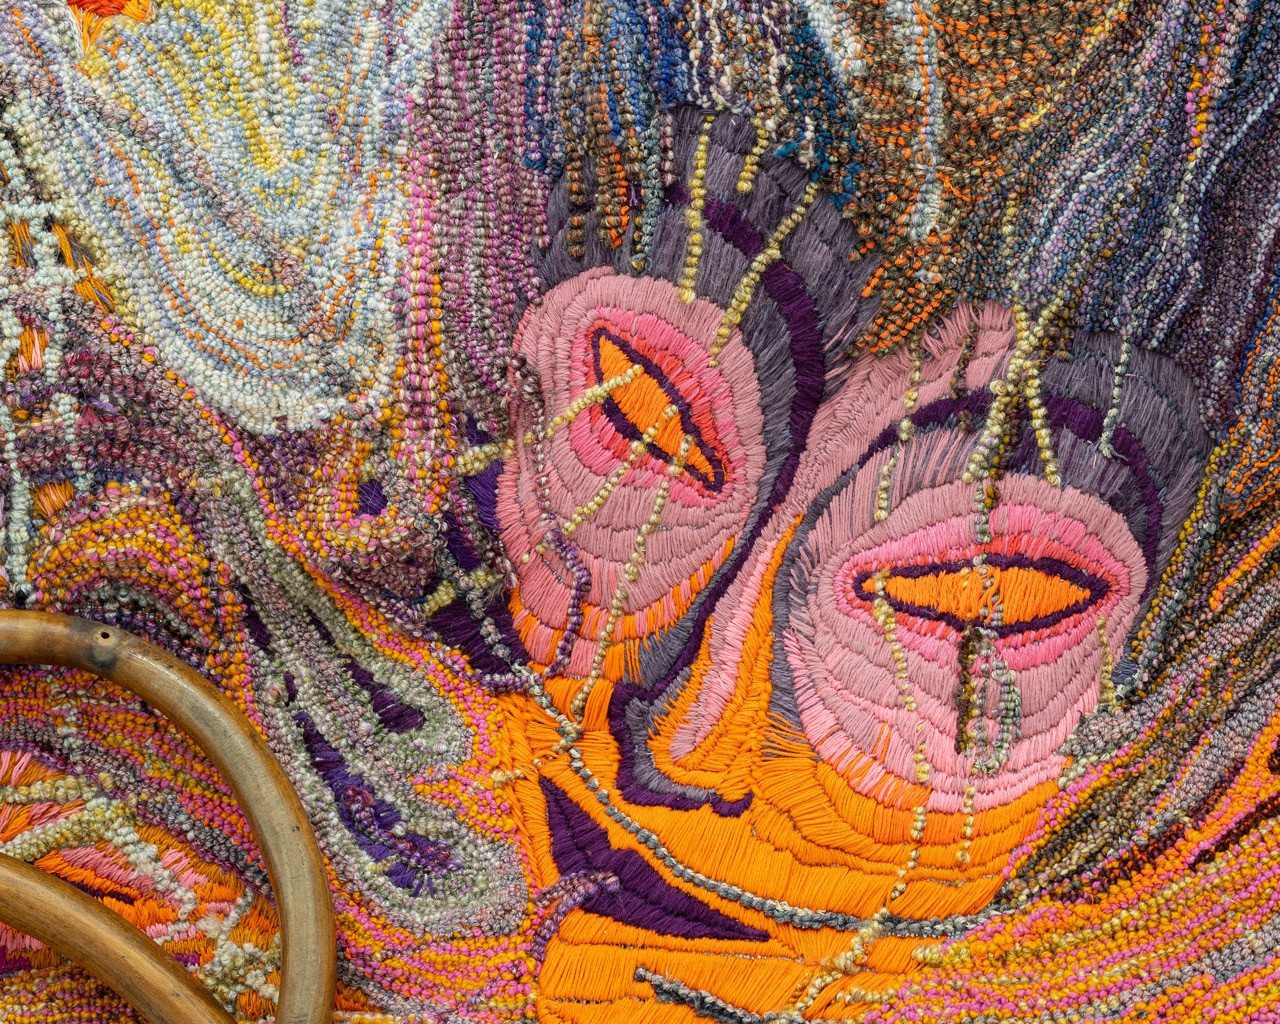 Marta NiedbaÅ‚, PaweÅ‚ OlszczyÅ„ski, "Dissolving" (detail), 2023, wool, cotton, silk on dyed jute, 170 x 190 cm, photo by Szymon SokoÅ‚owski